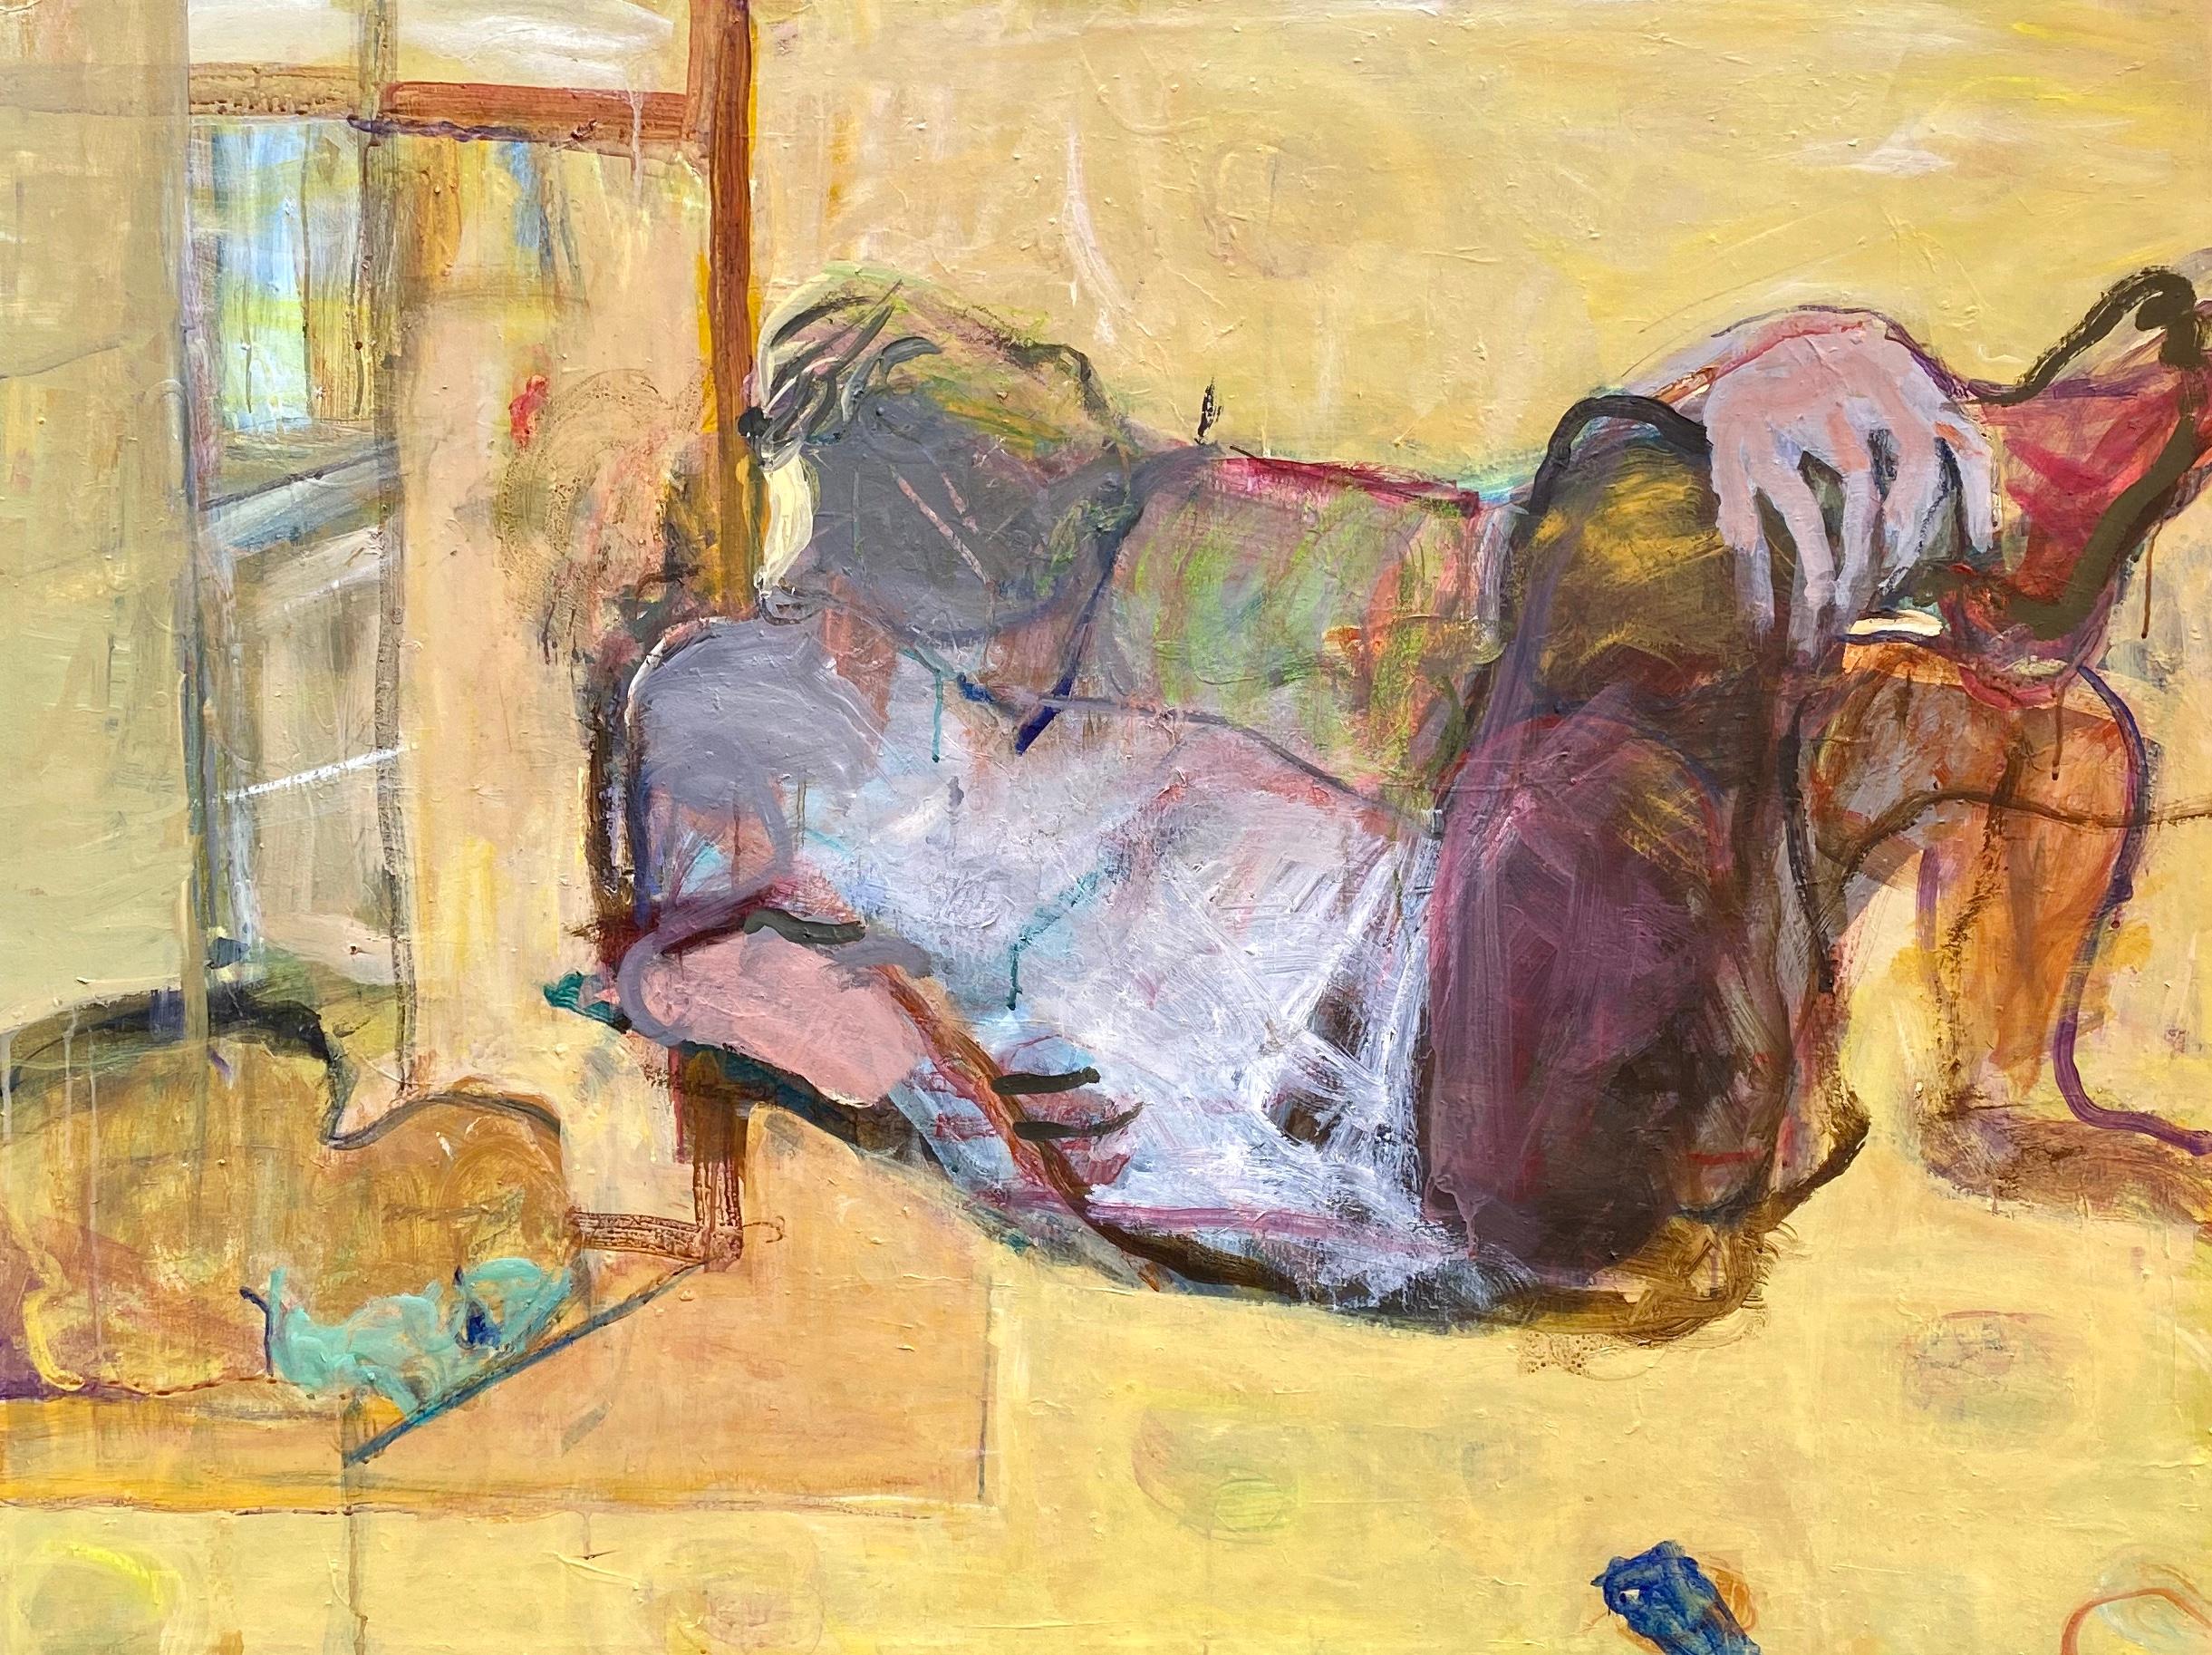 Figurative Painting Ilana Seati - Peinture figurative abstraite jaune pastel sur toile